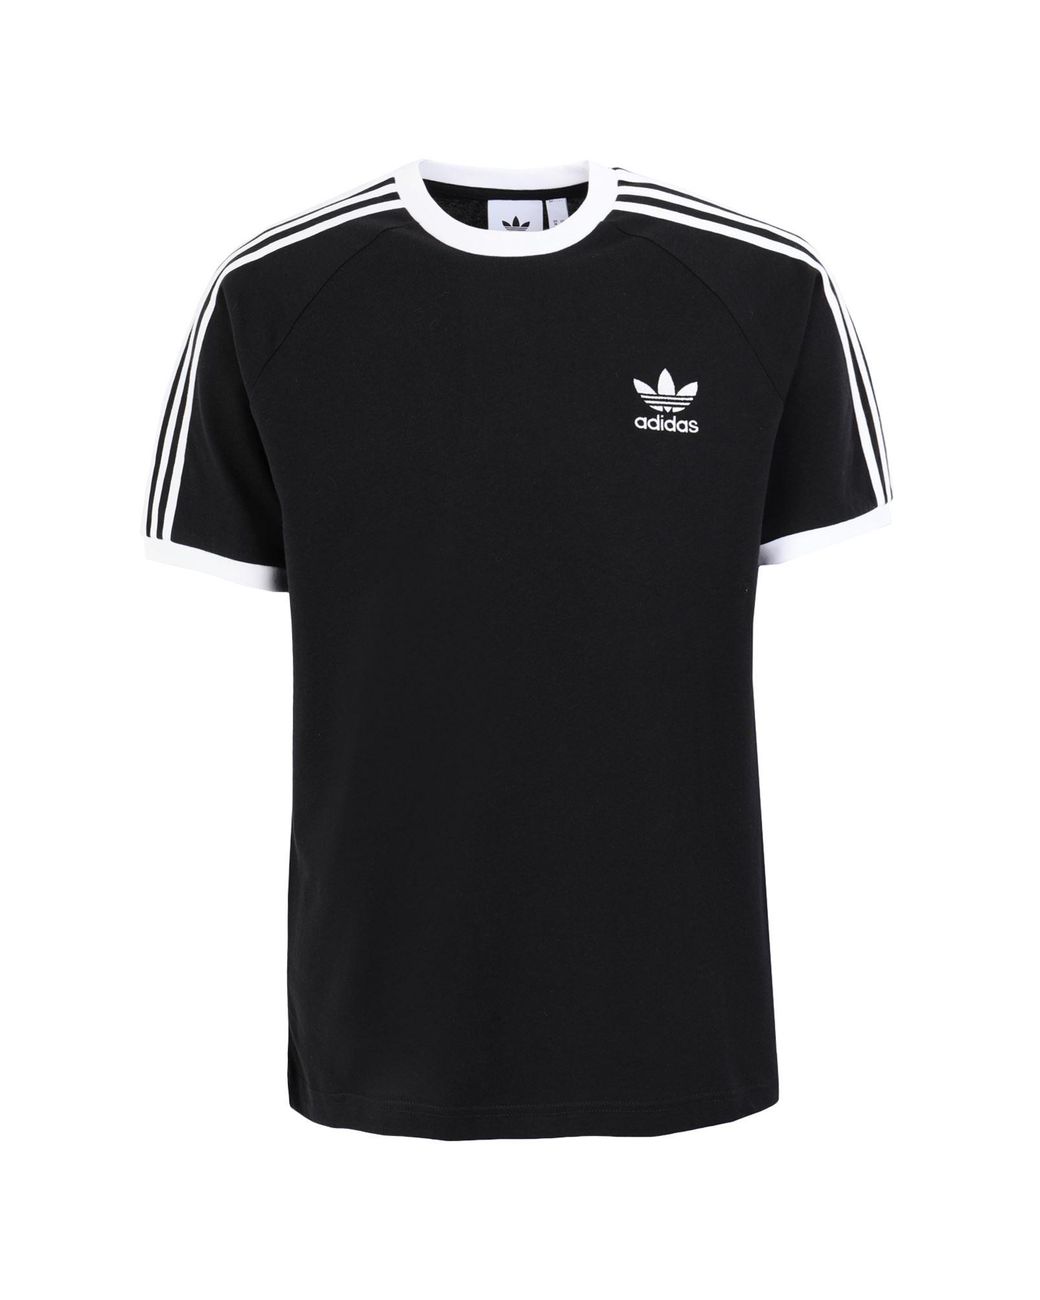 adidas Originals Cotton T-shirt in Black for Men - Lyst